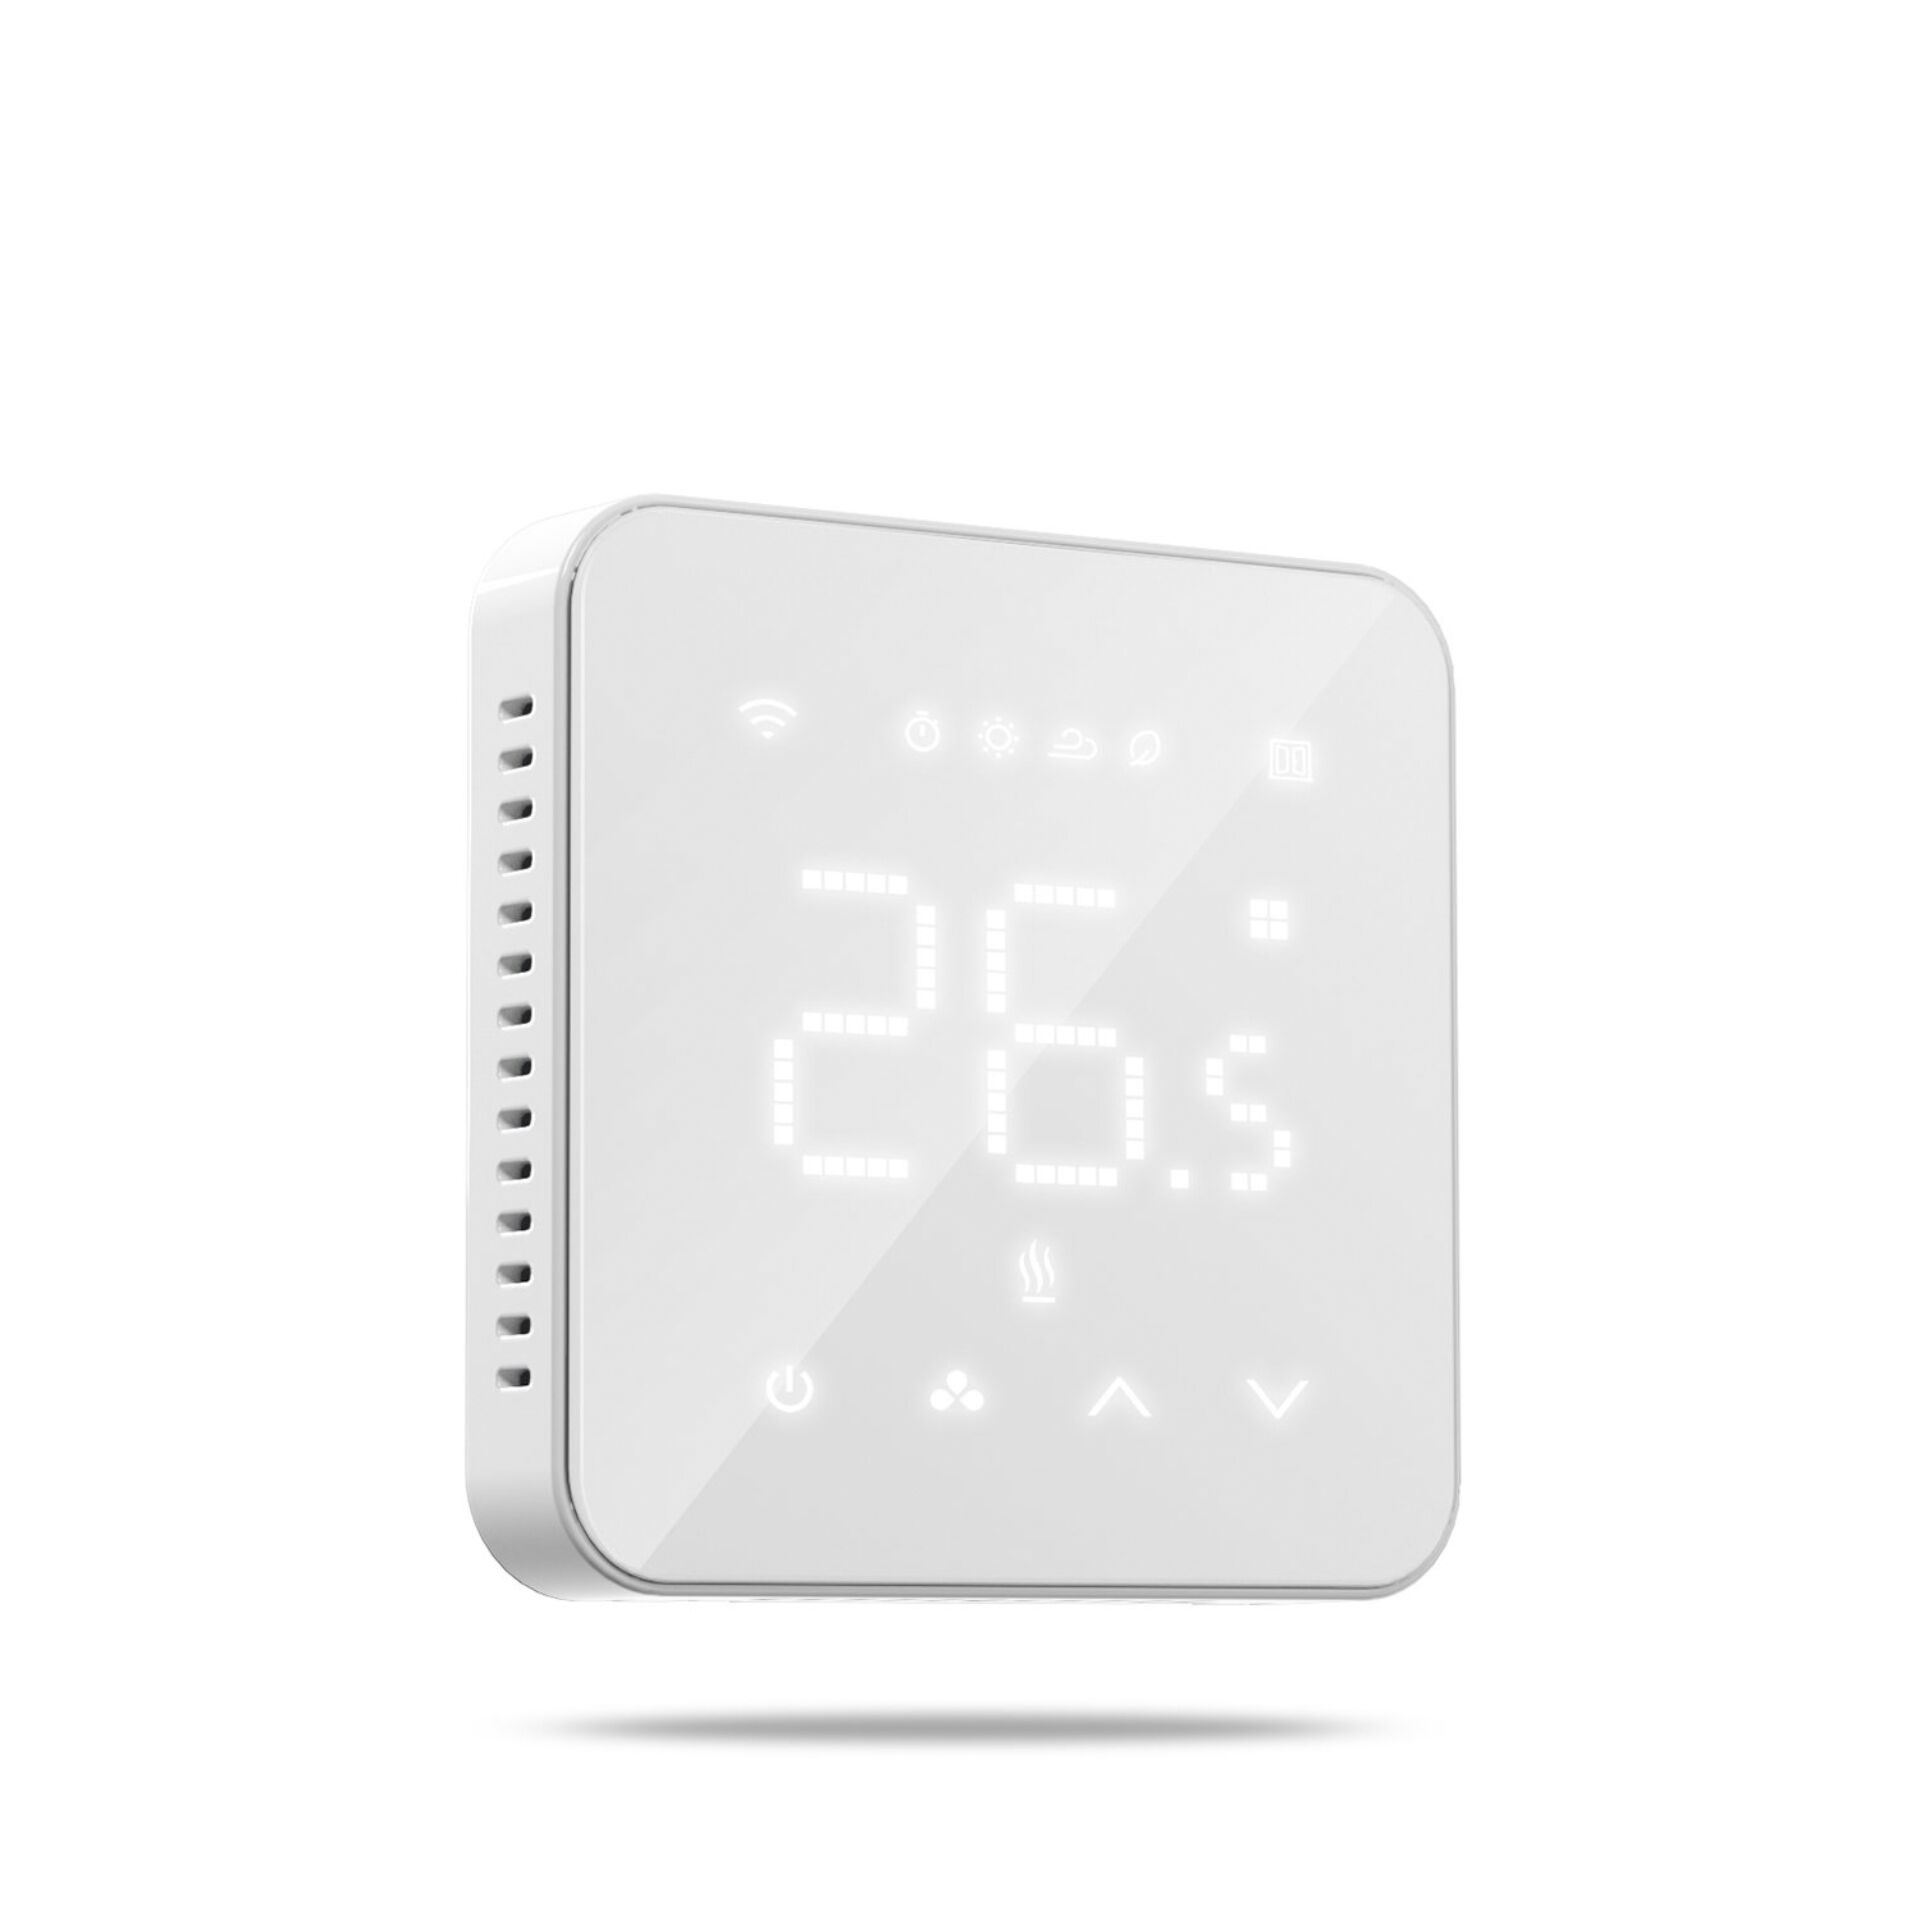 Meross Smart Wi-Fi termostato per riscaldamento a pavimento